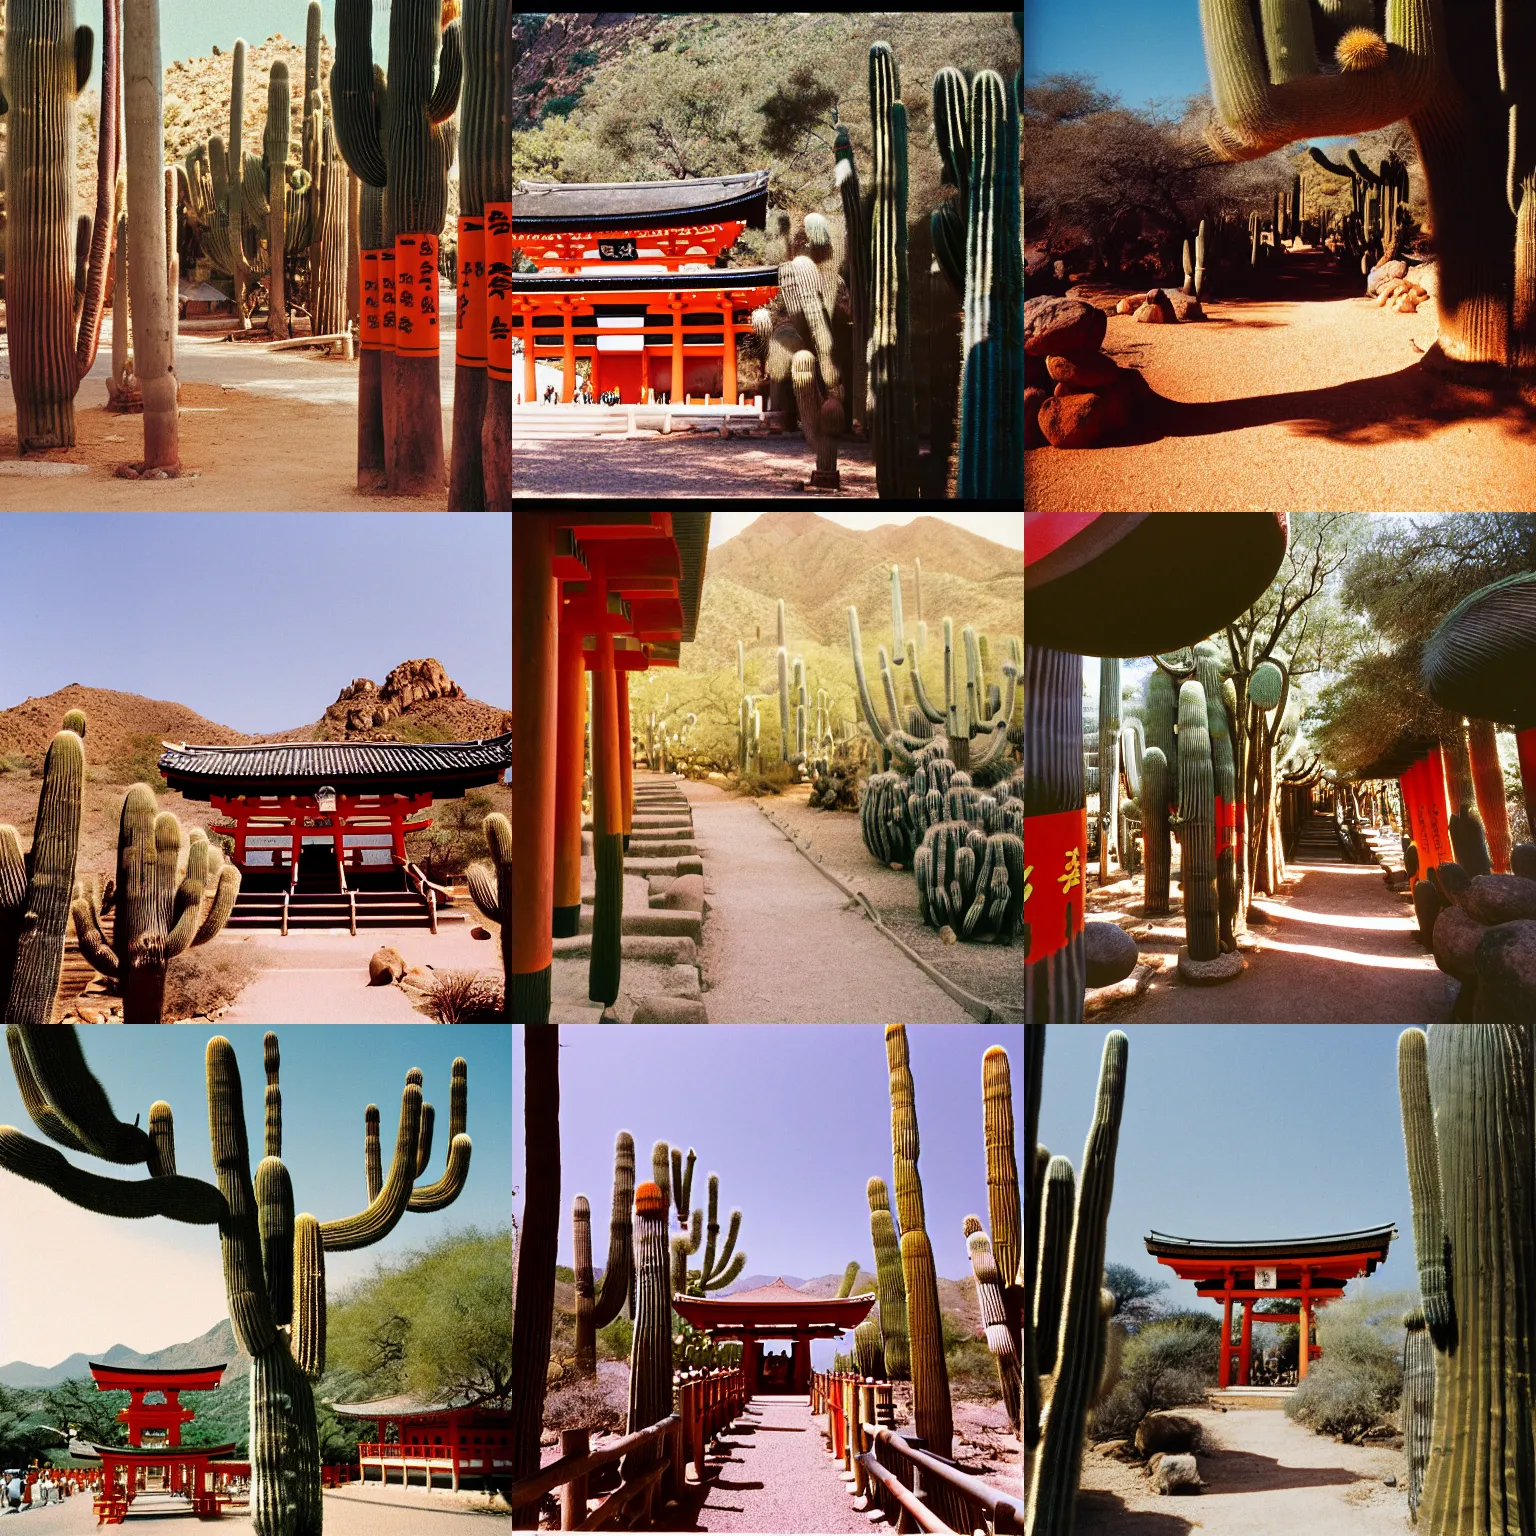 Prompt: fushimi inari taisha shinto shrine (jinja) in the desert southwest, small saguaro cactus visible, late morning, kodak gold 200, film grain, perspective correction, depth of field